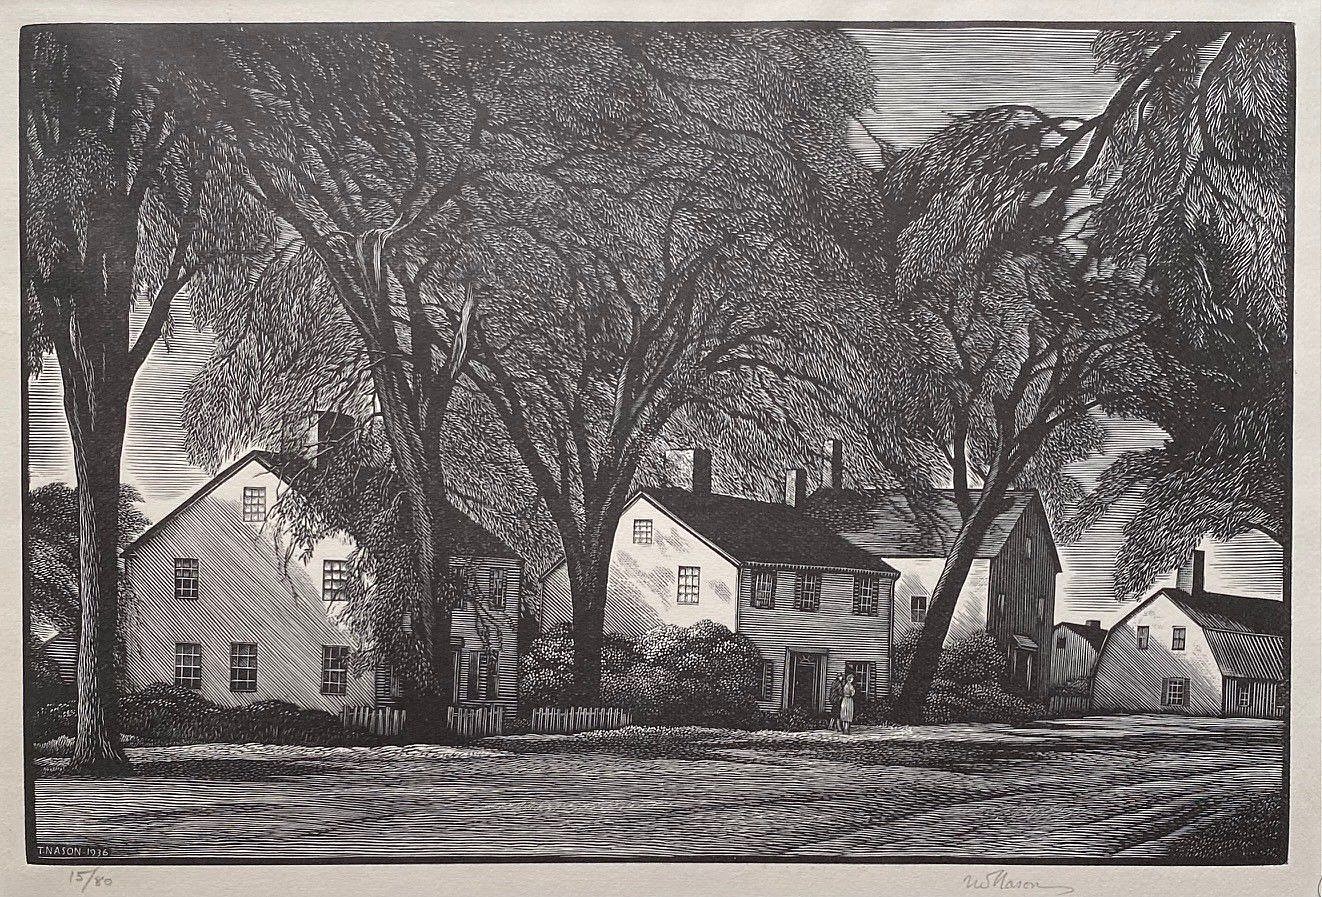 Thomas Willoughby Nason, Village Street, 1936
wood engraving on paper, 6 3/8"" x 9 1/2""
JCA 6605
$1,250